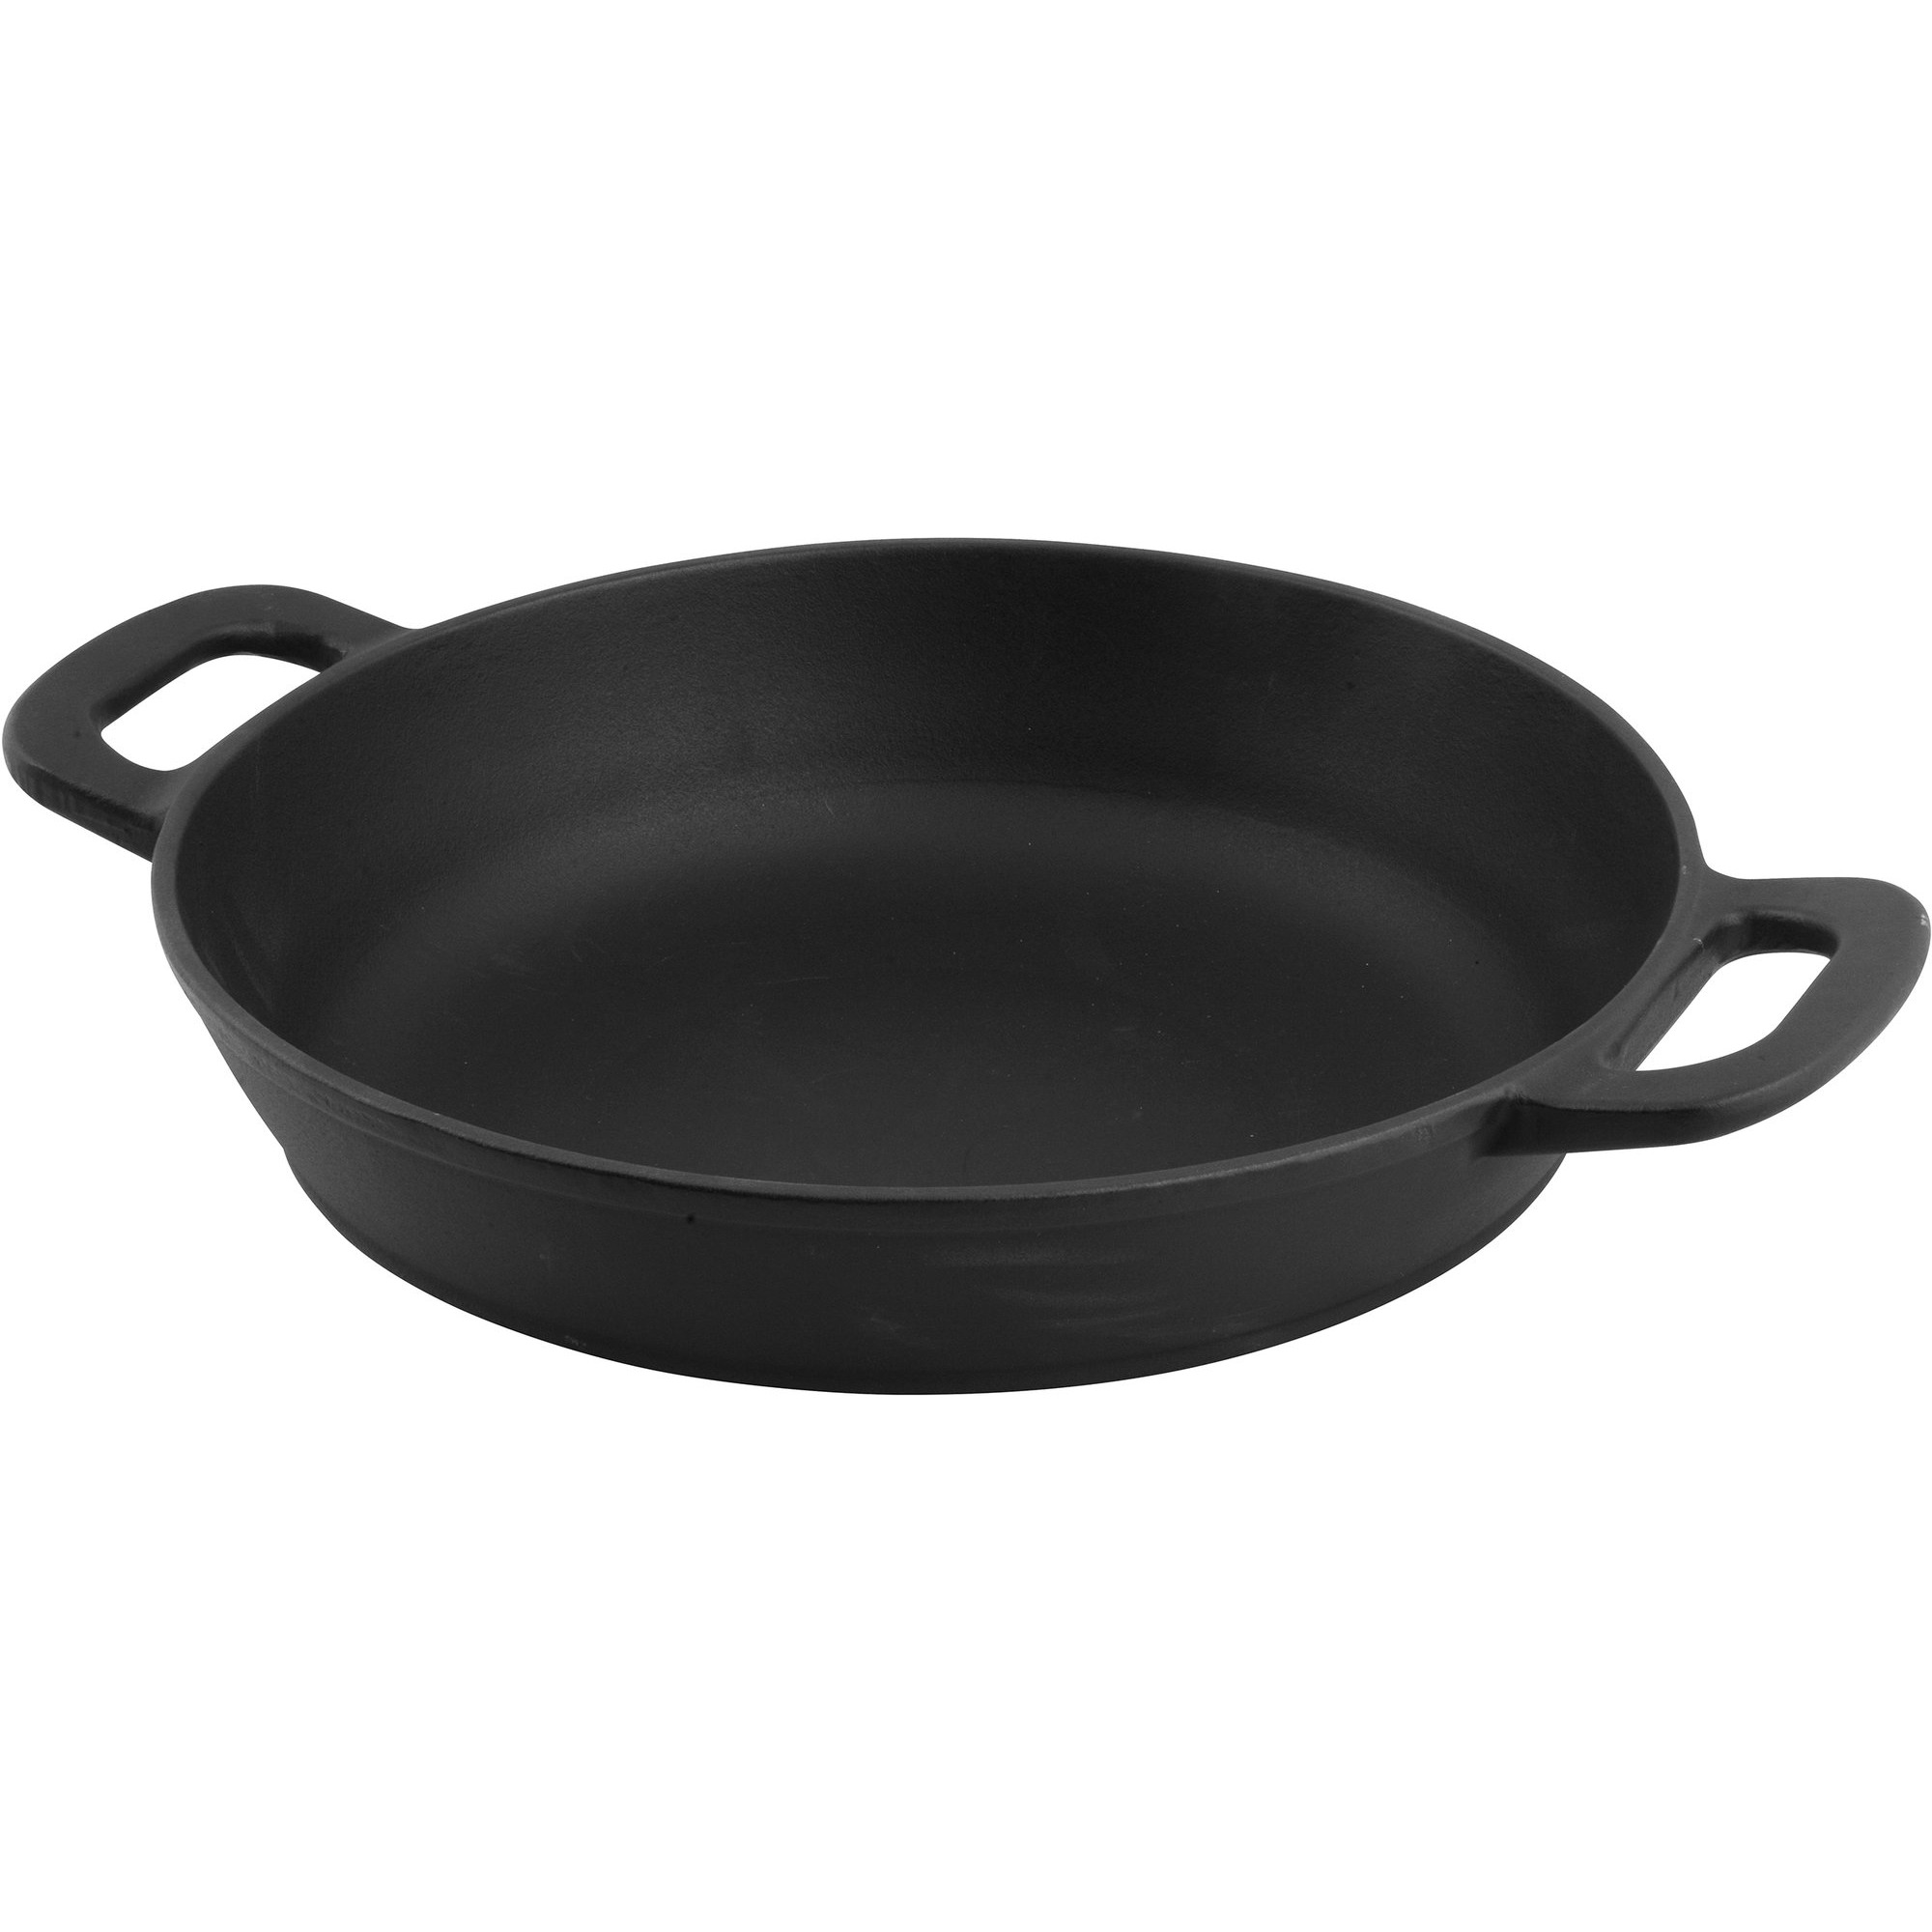 5: Dangrill Grill flex wok